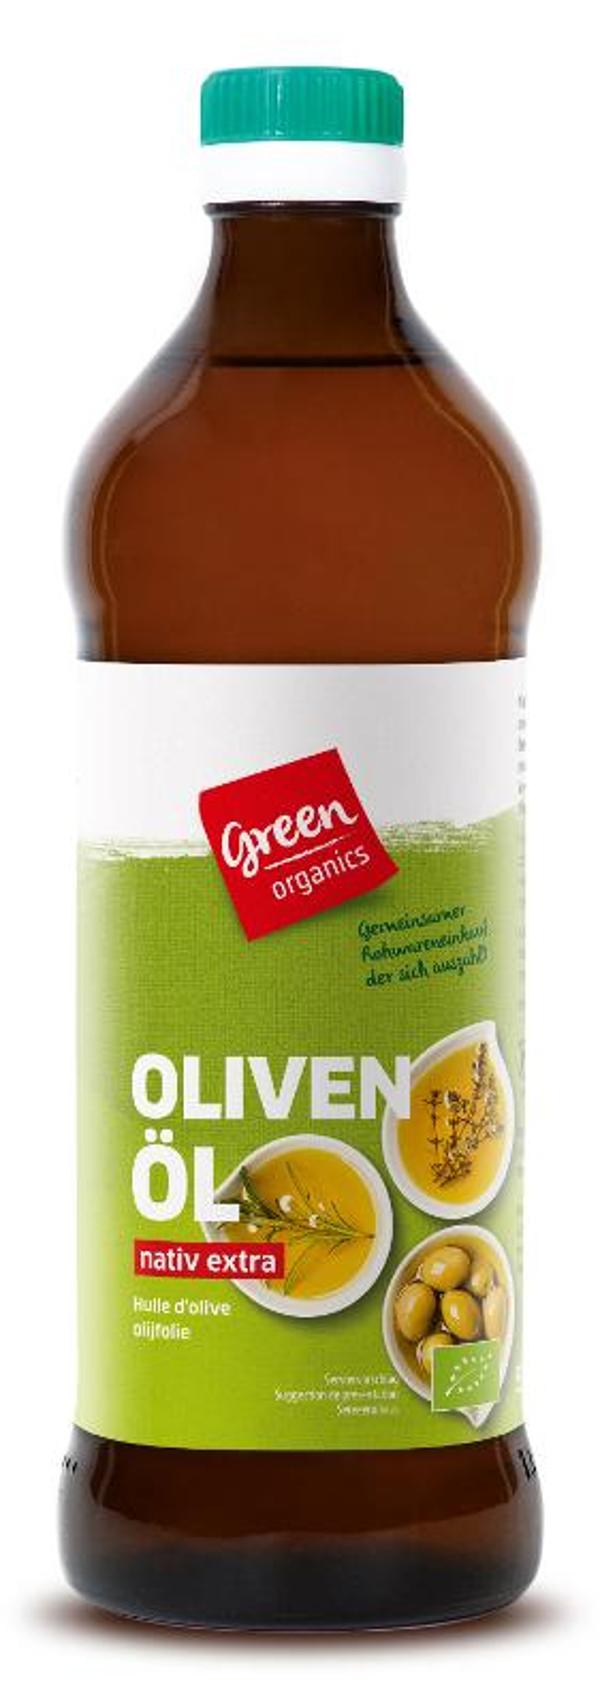 Produktfoto zu green Oliven-Öl nativ extra